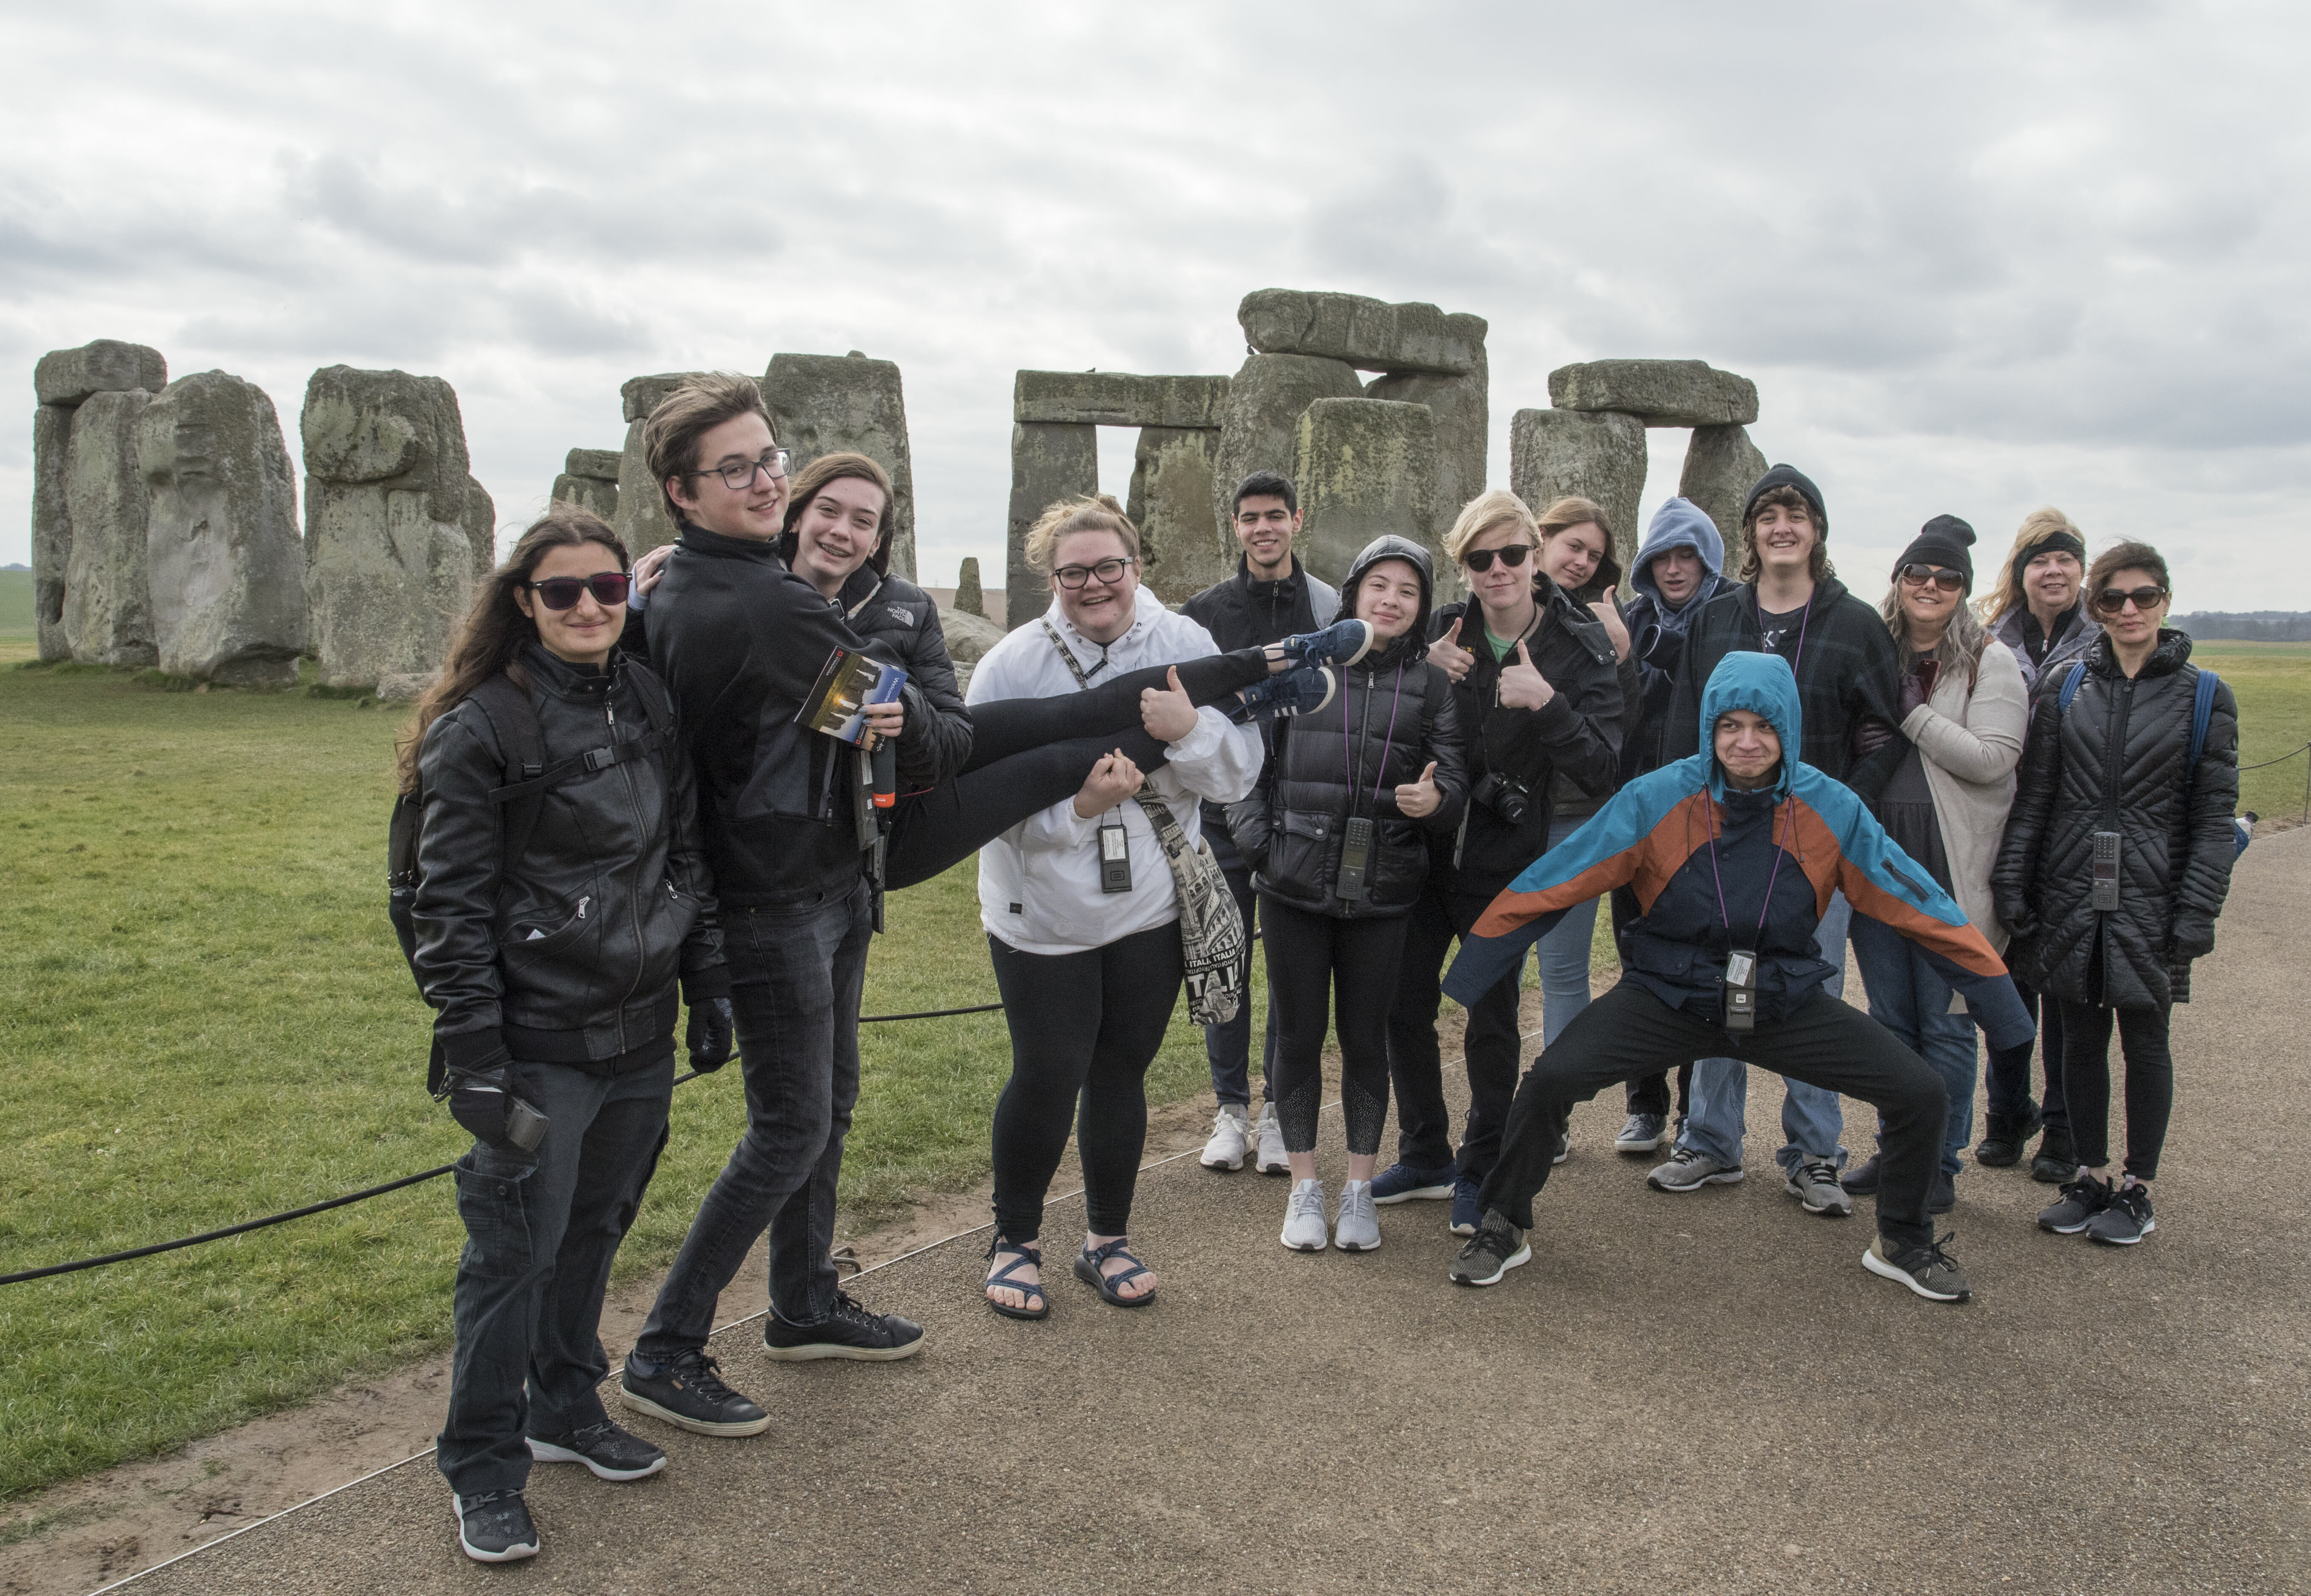 Students visit the Stonehenge